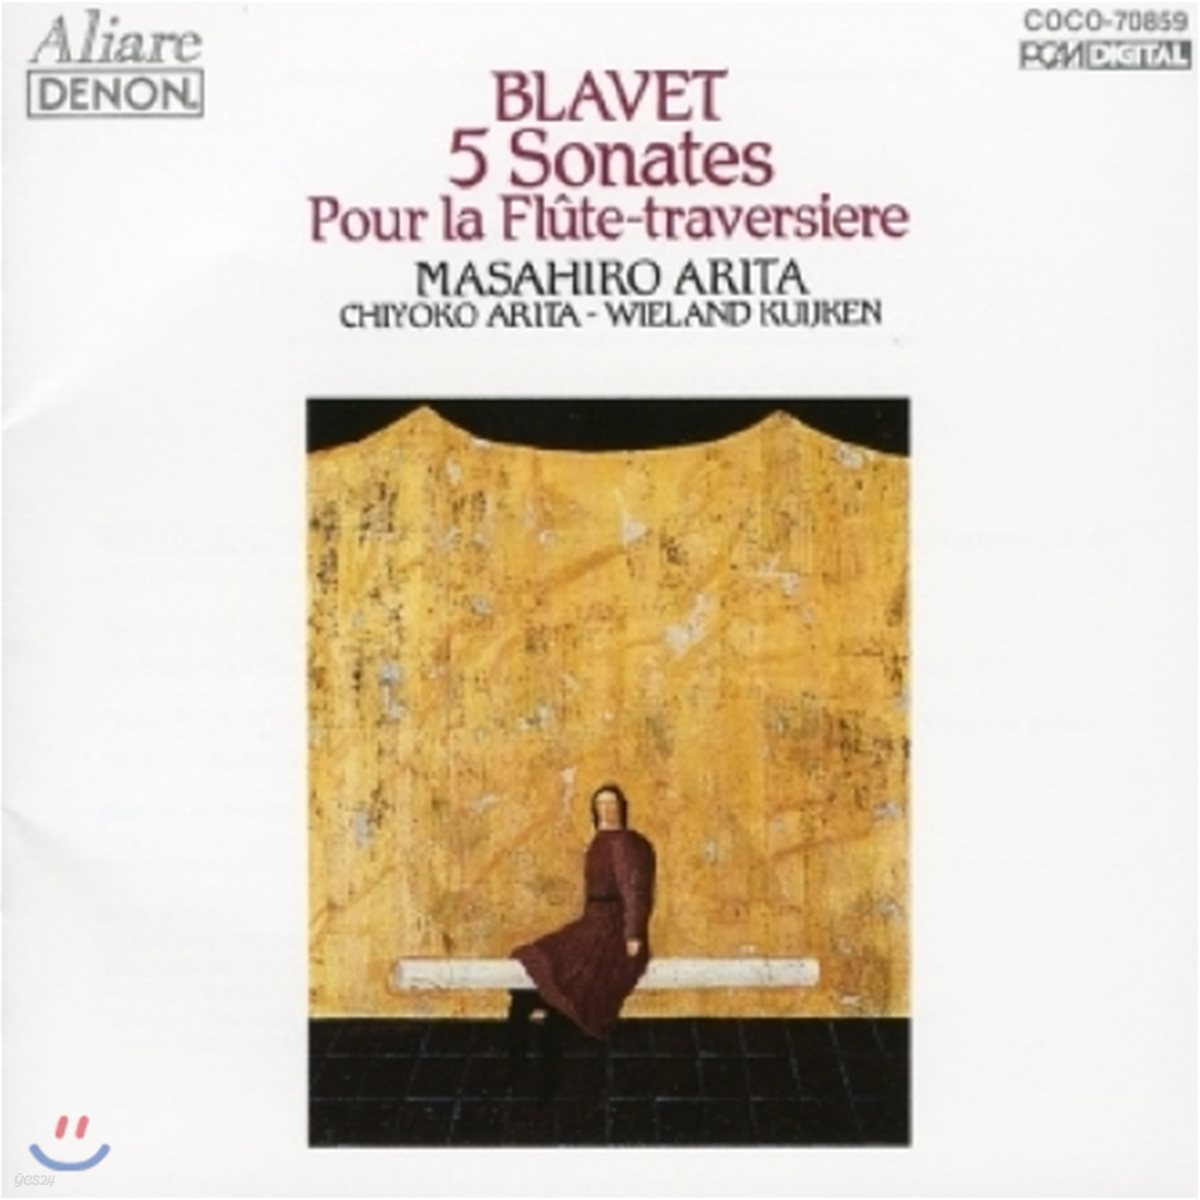 Masahiro Arita 블라베: 5개의 플루트 소나타 (Michel Blavet: 5 Sonates Pour La Flute-traversiere)